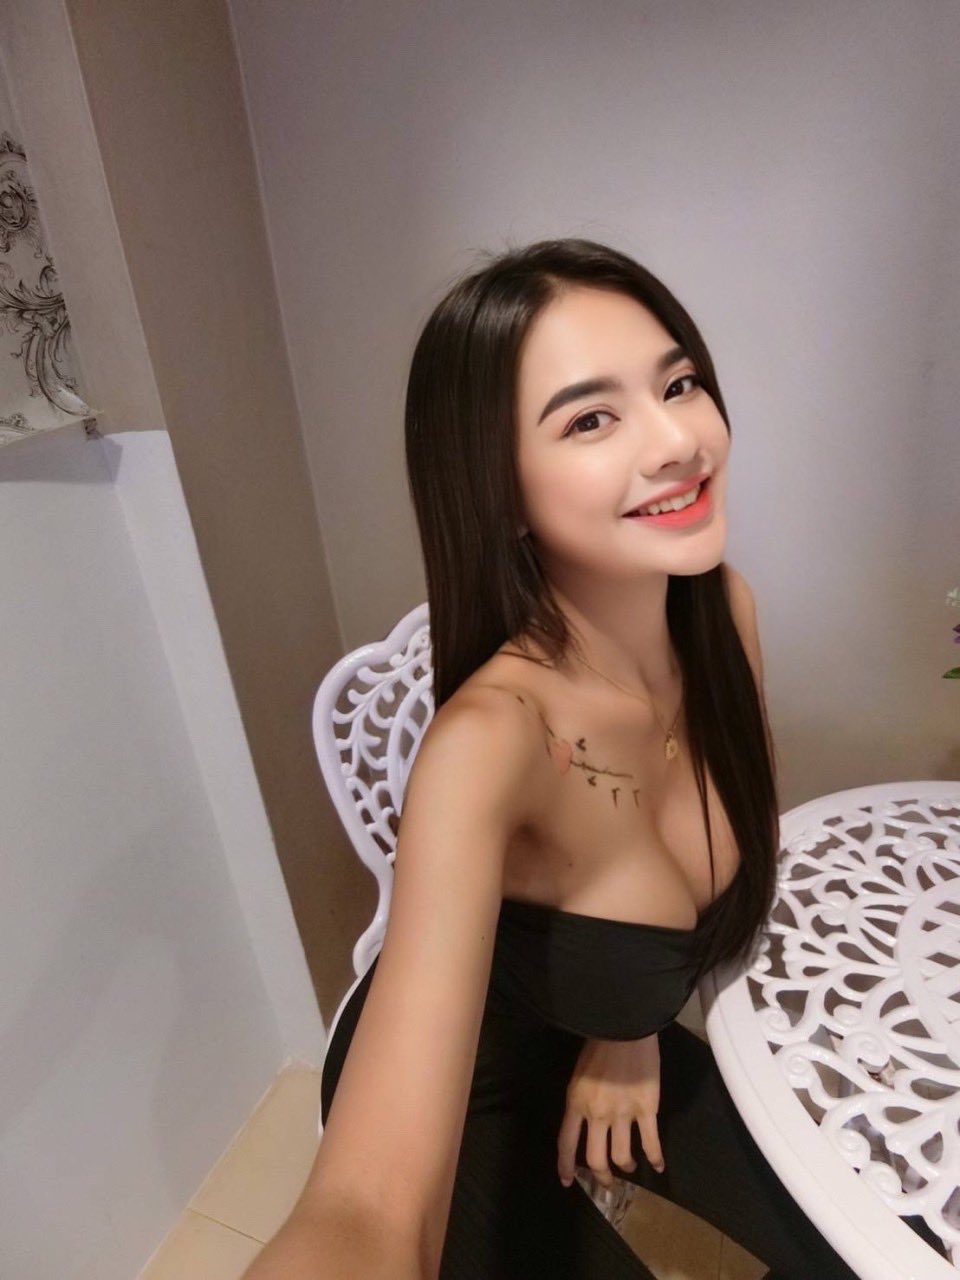 Thai Daughter Showing Her Beautiful Smile